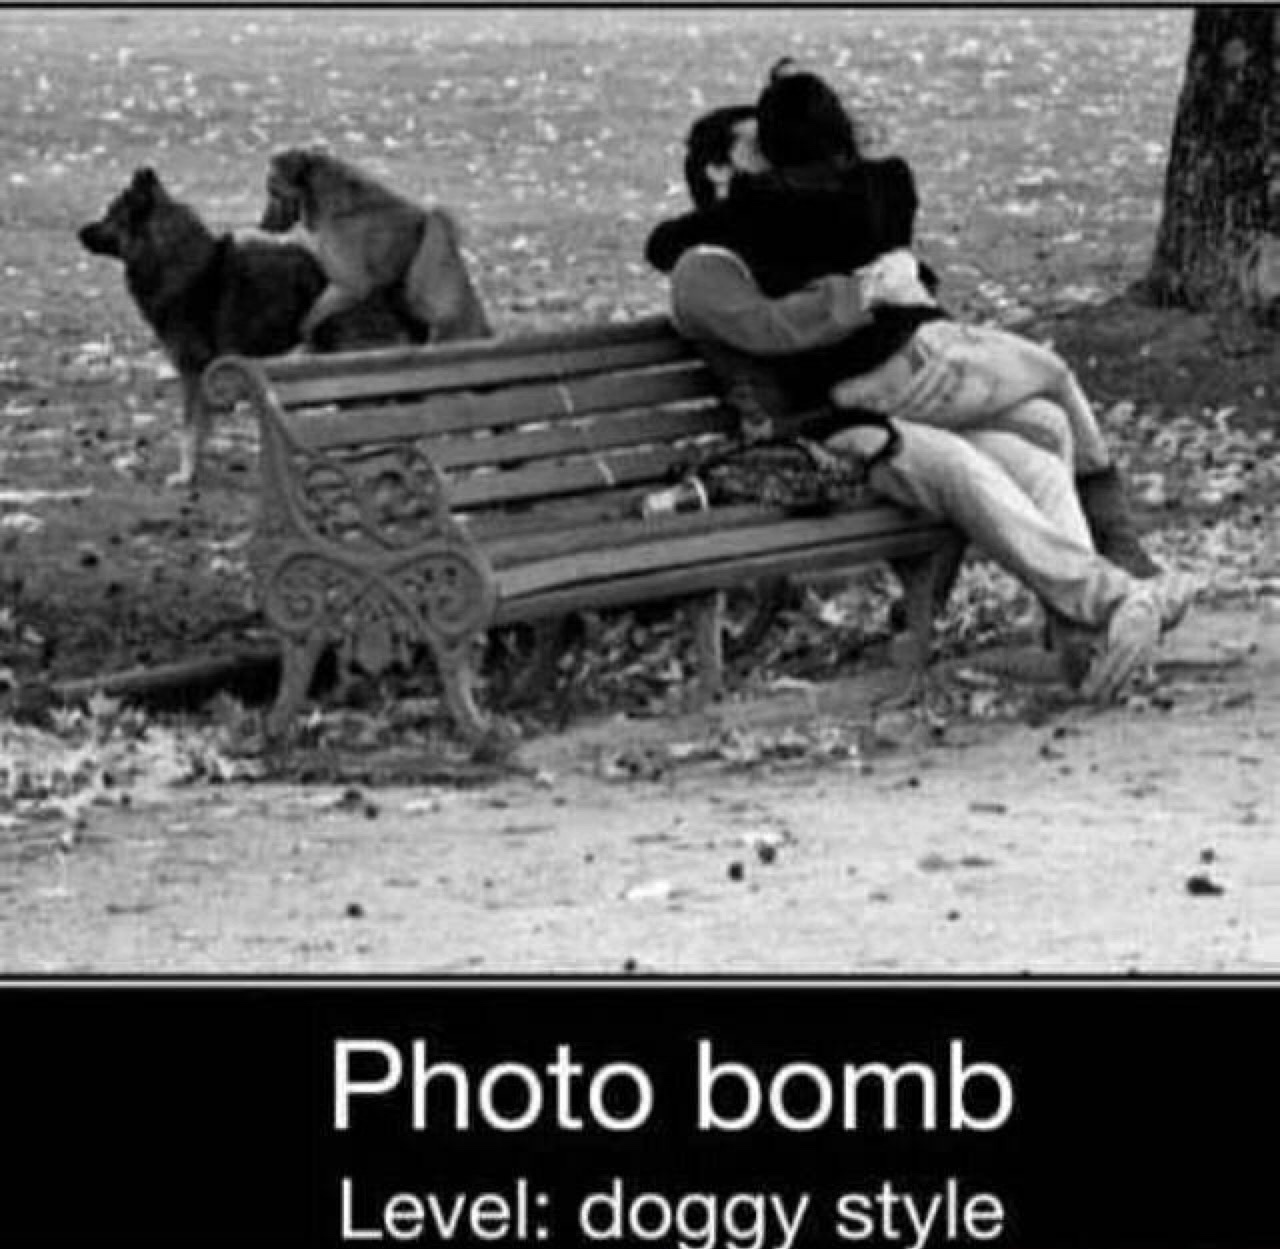 Doggo style bombs - meme